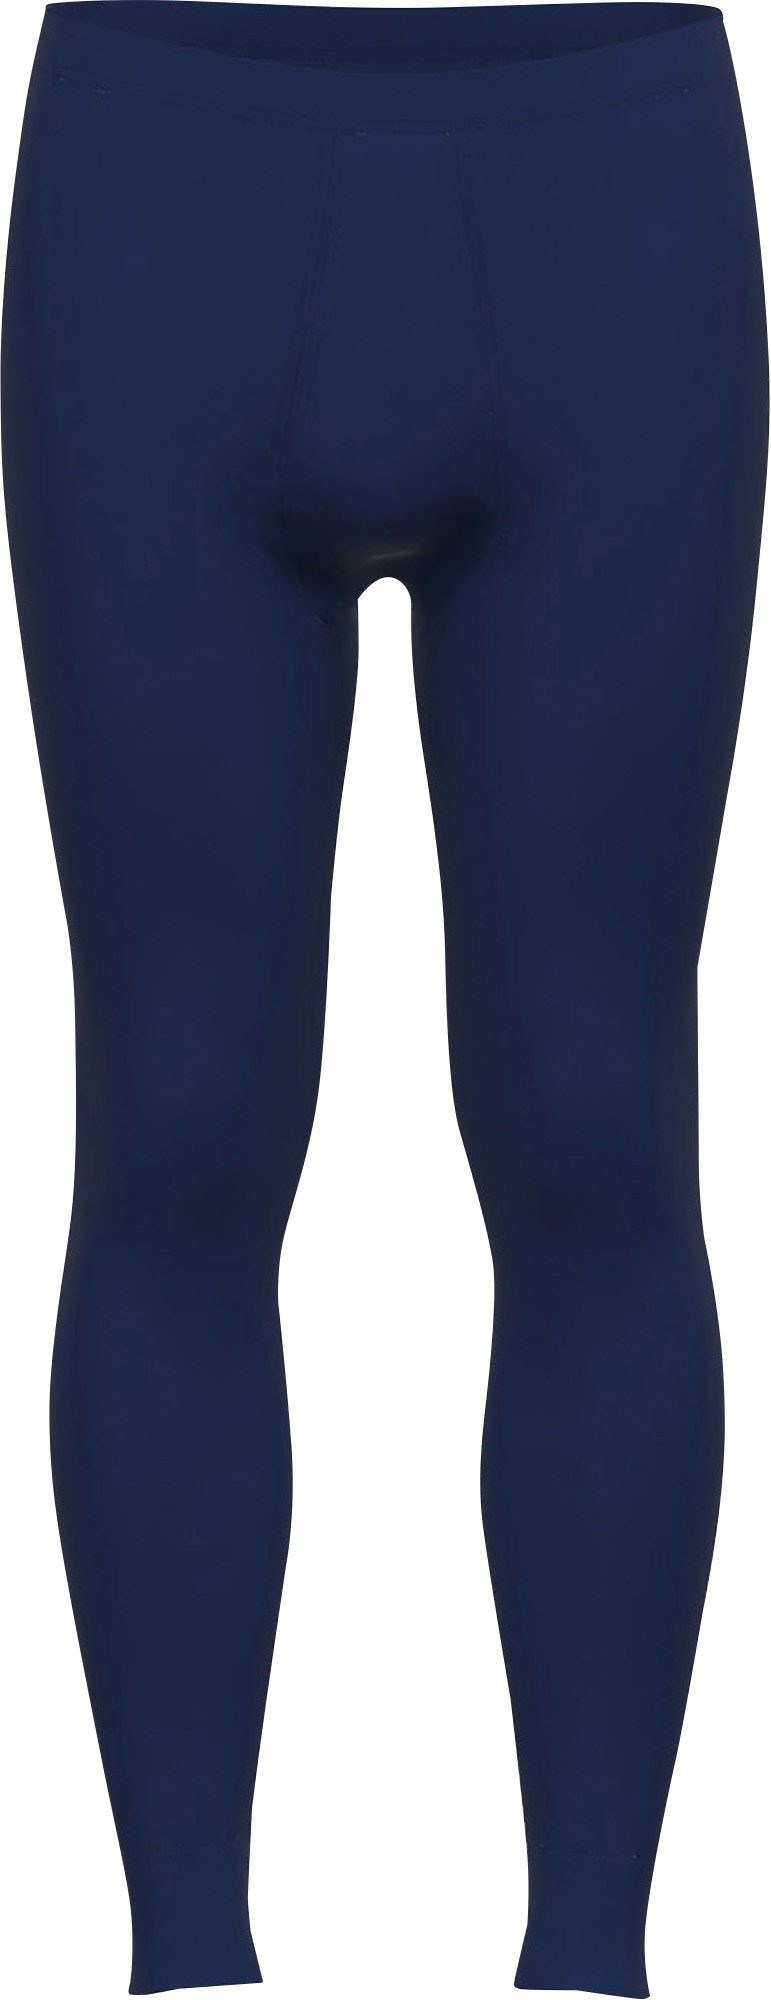 GÖTZBURG Lange Unterhose Herren-Thermo-Unterhose, lang Interlock-Jersey Uni blau-dunkel